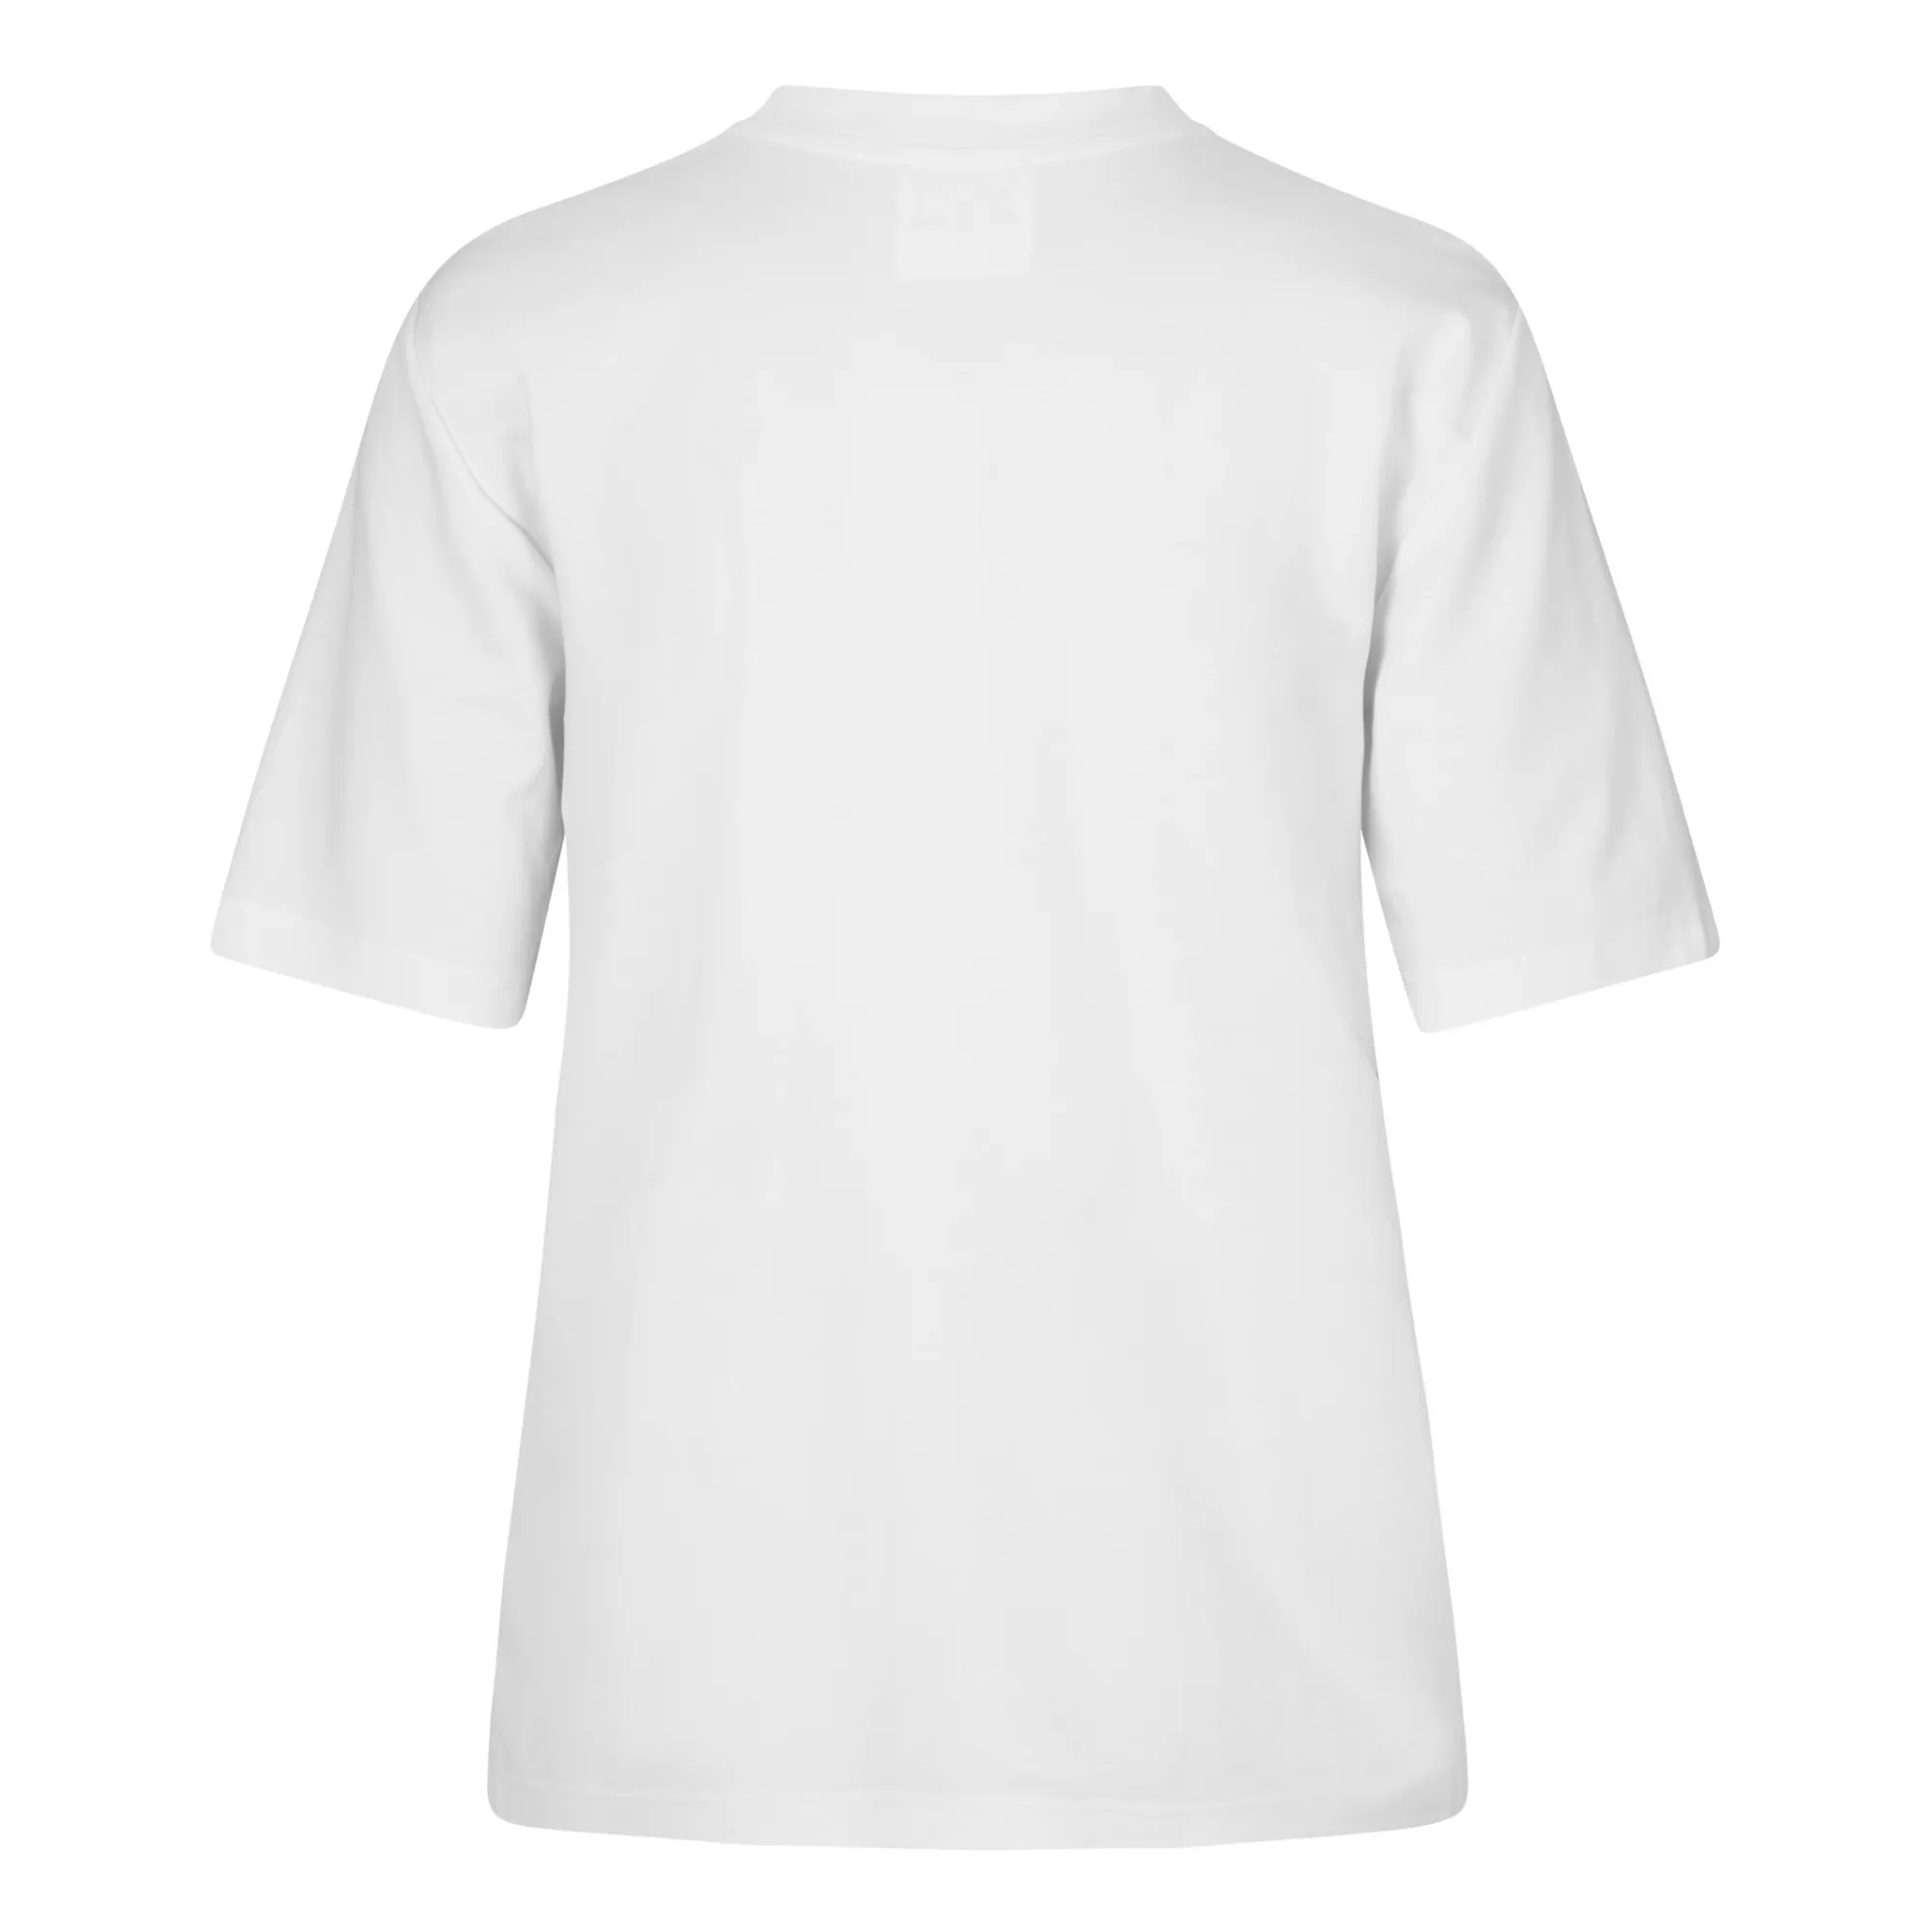 Capri White Linen Fabric by MILK Shirts